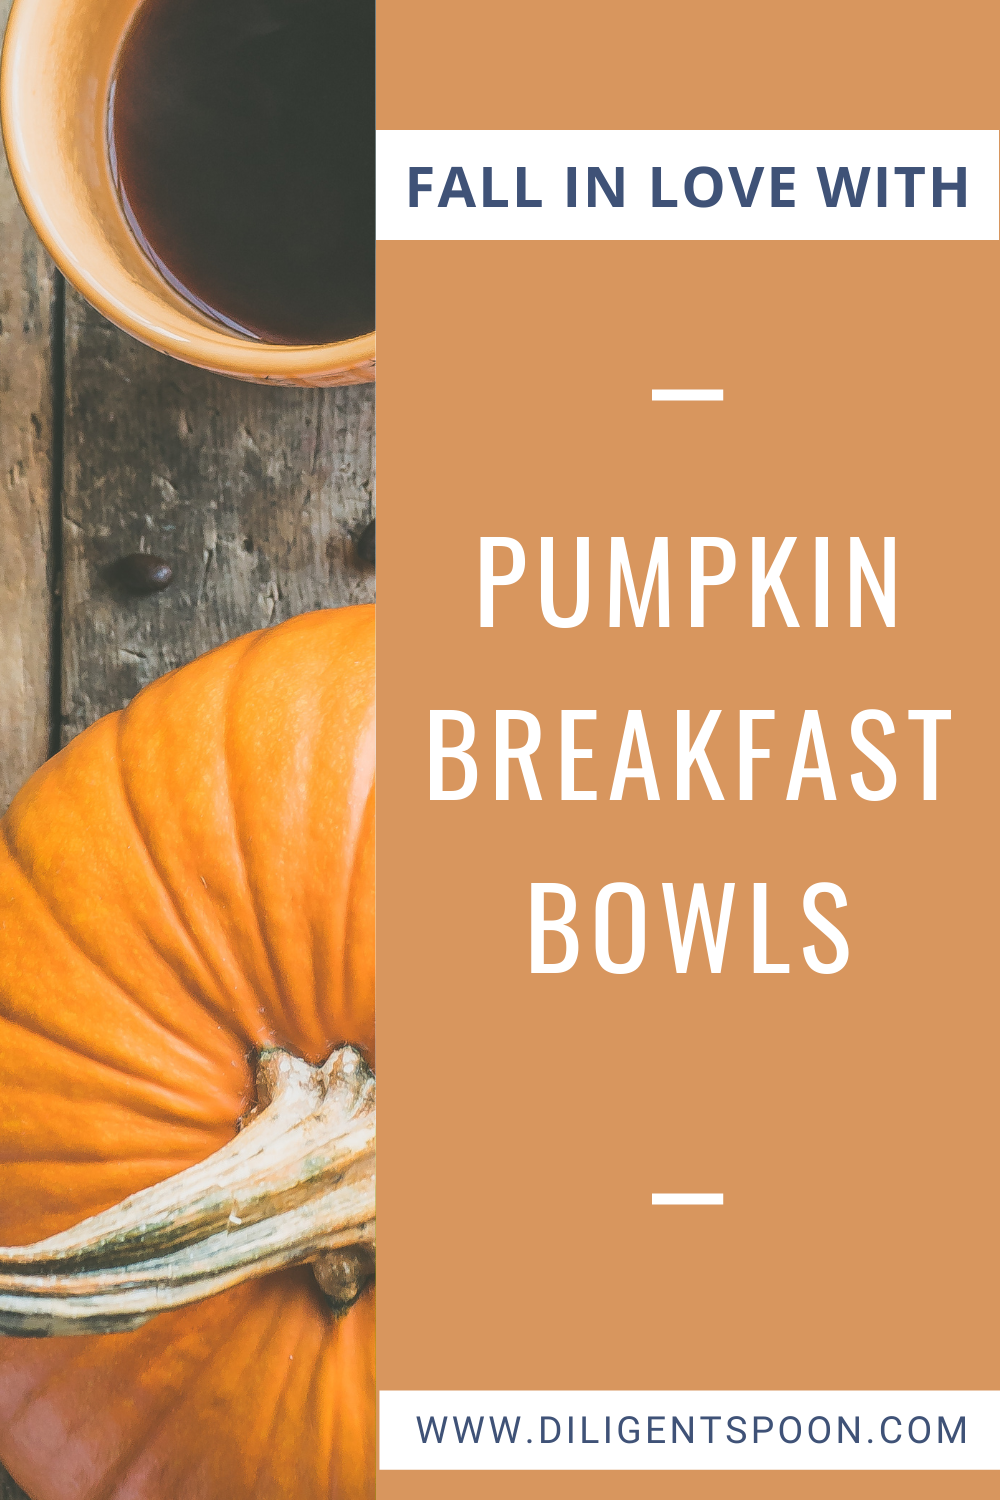 Fall in Love With Pumpkin Breakfast Bowls